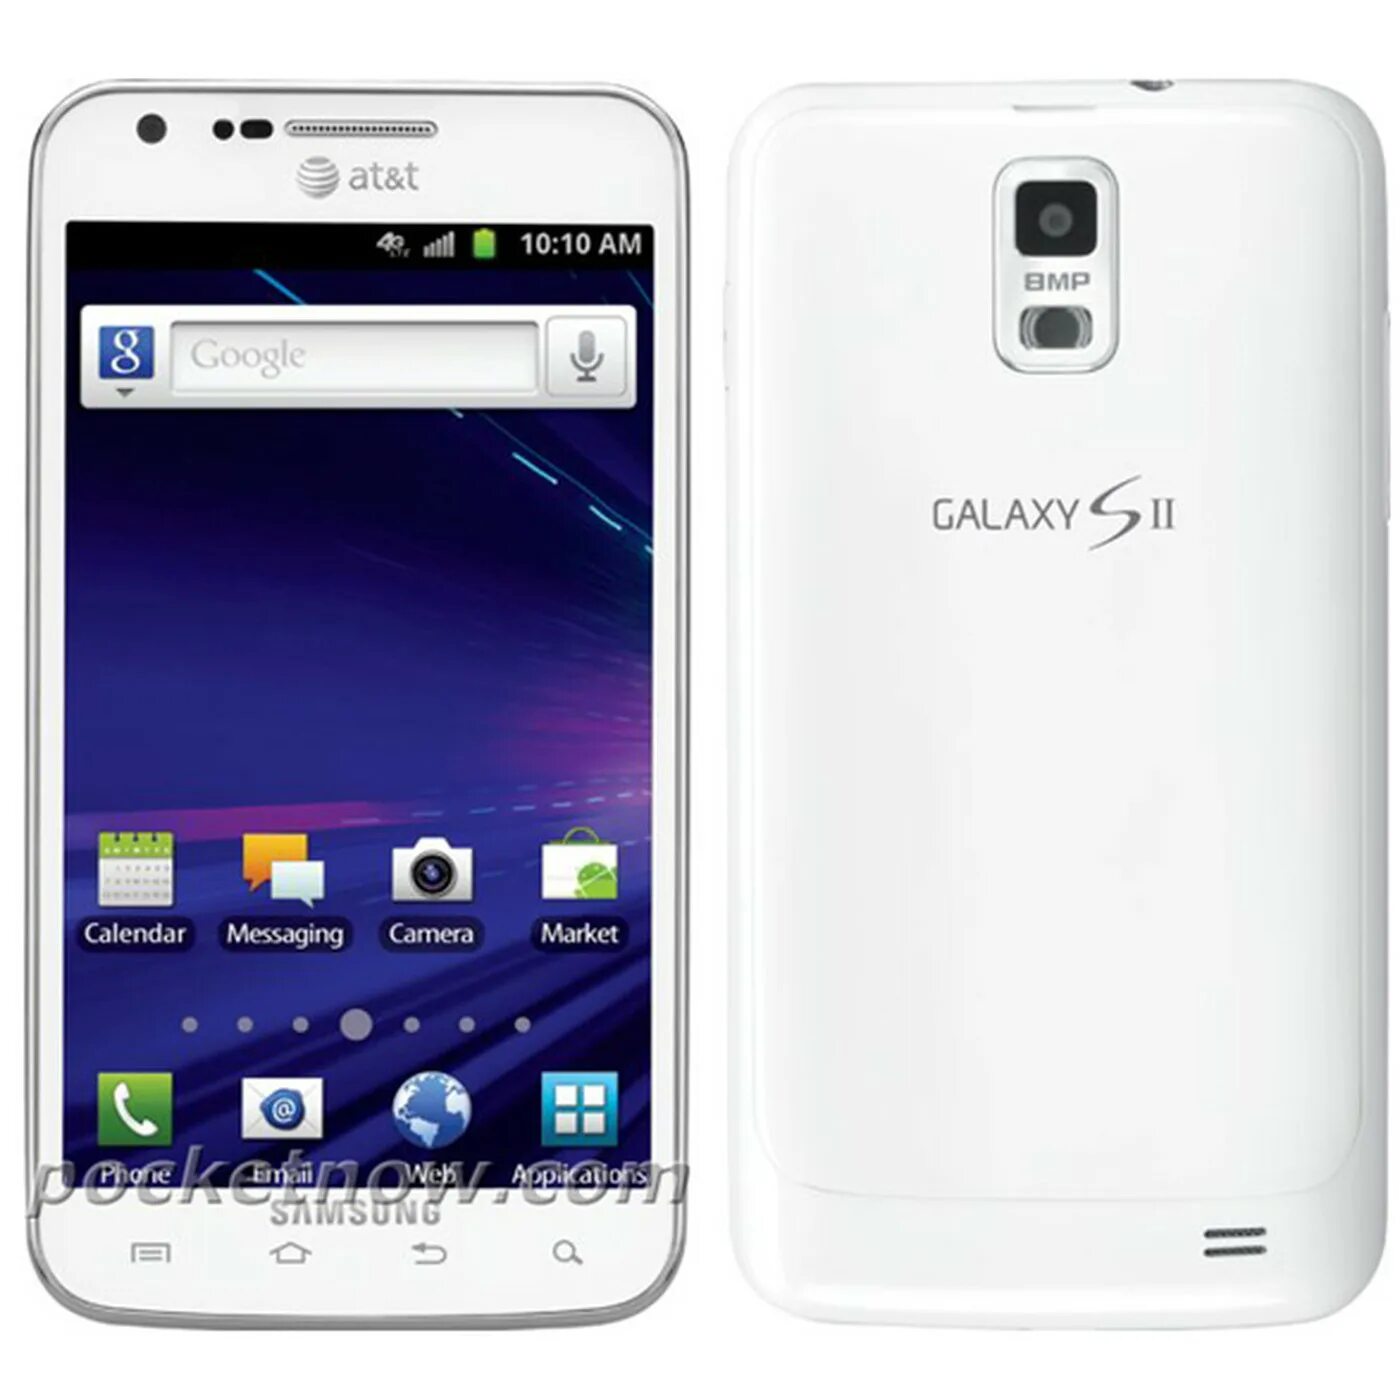 Galaxy s 15. Samsung Galaxy s2. Samsung Galaxy s2 White. Samsung Galaxy s 2 Skyrocket. Самсунг галакси с2 белый.